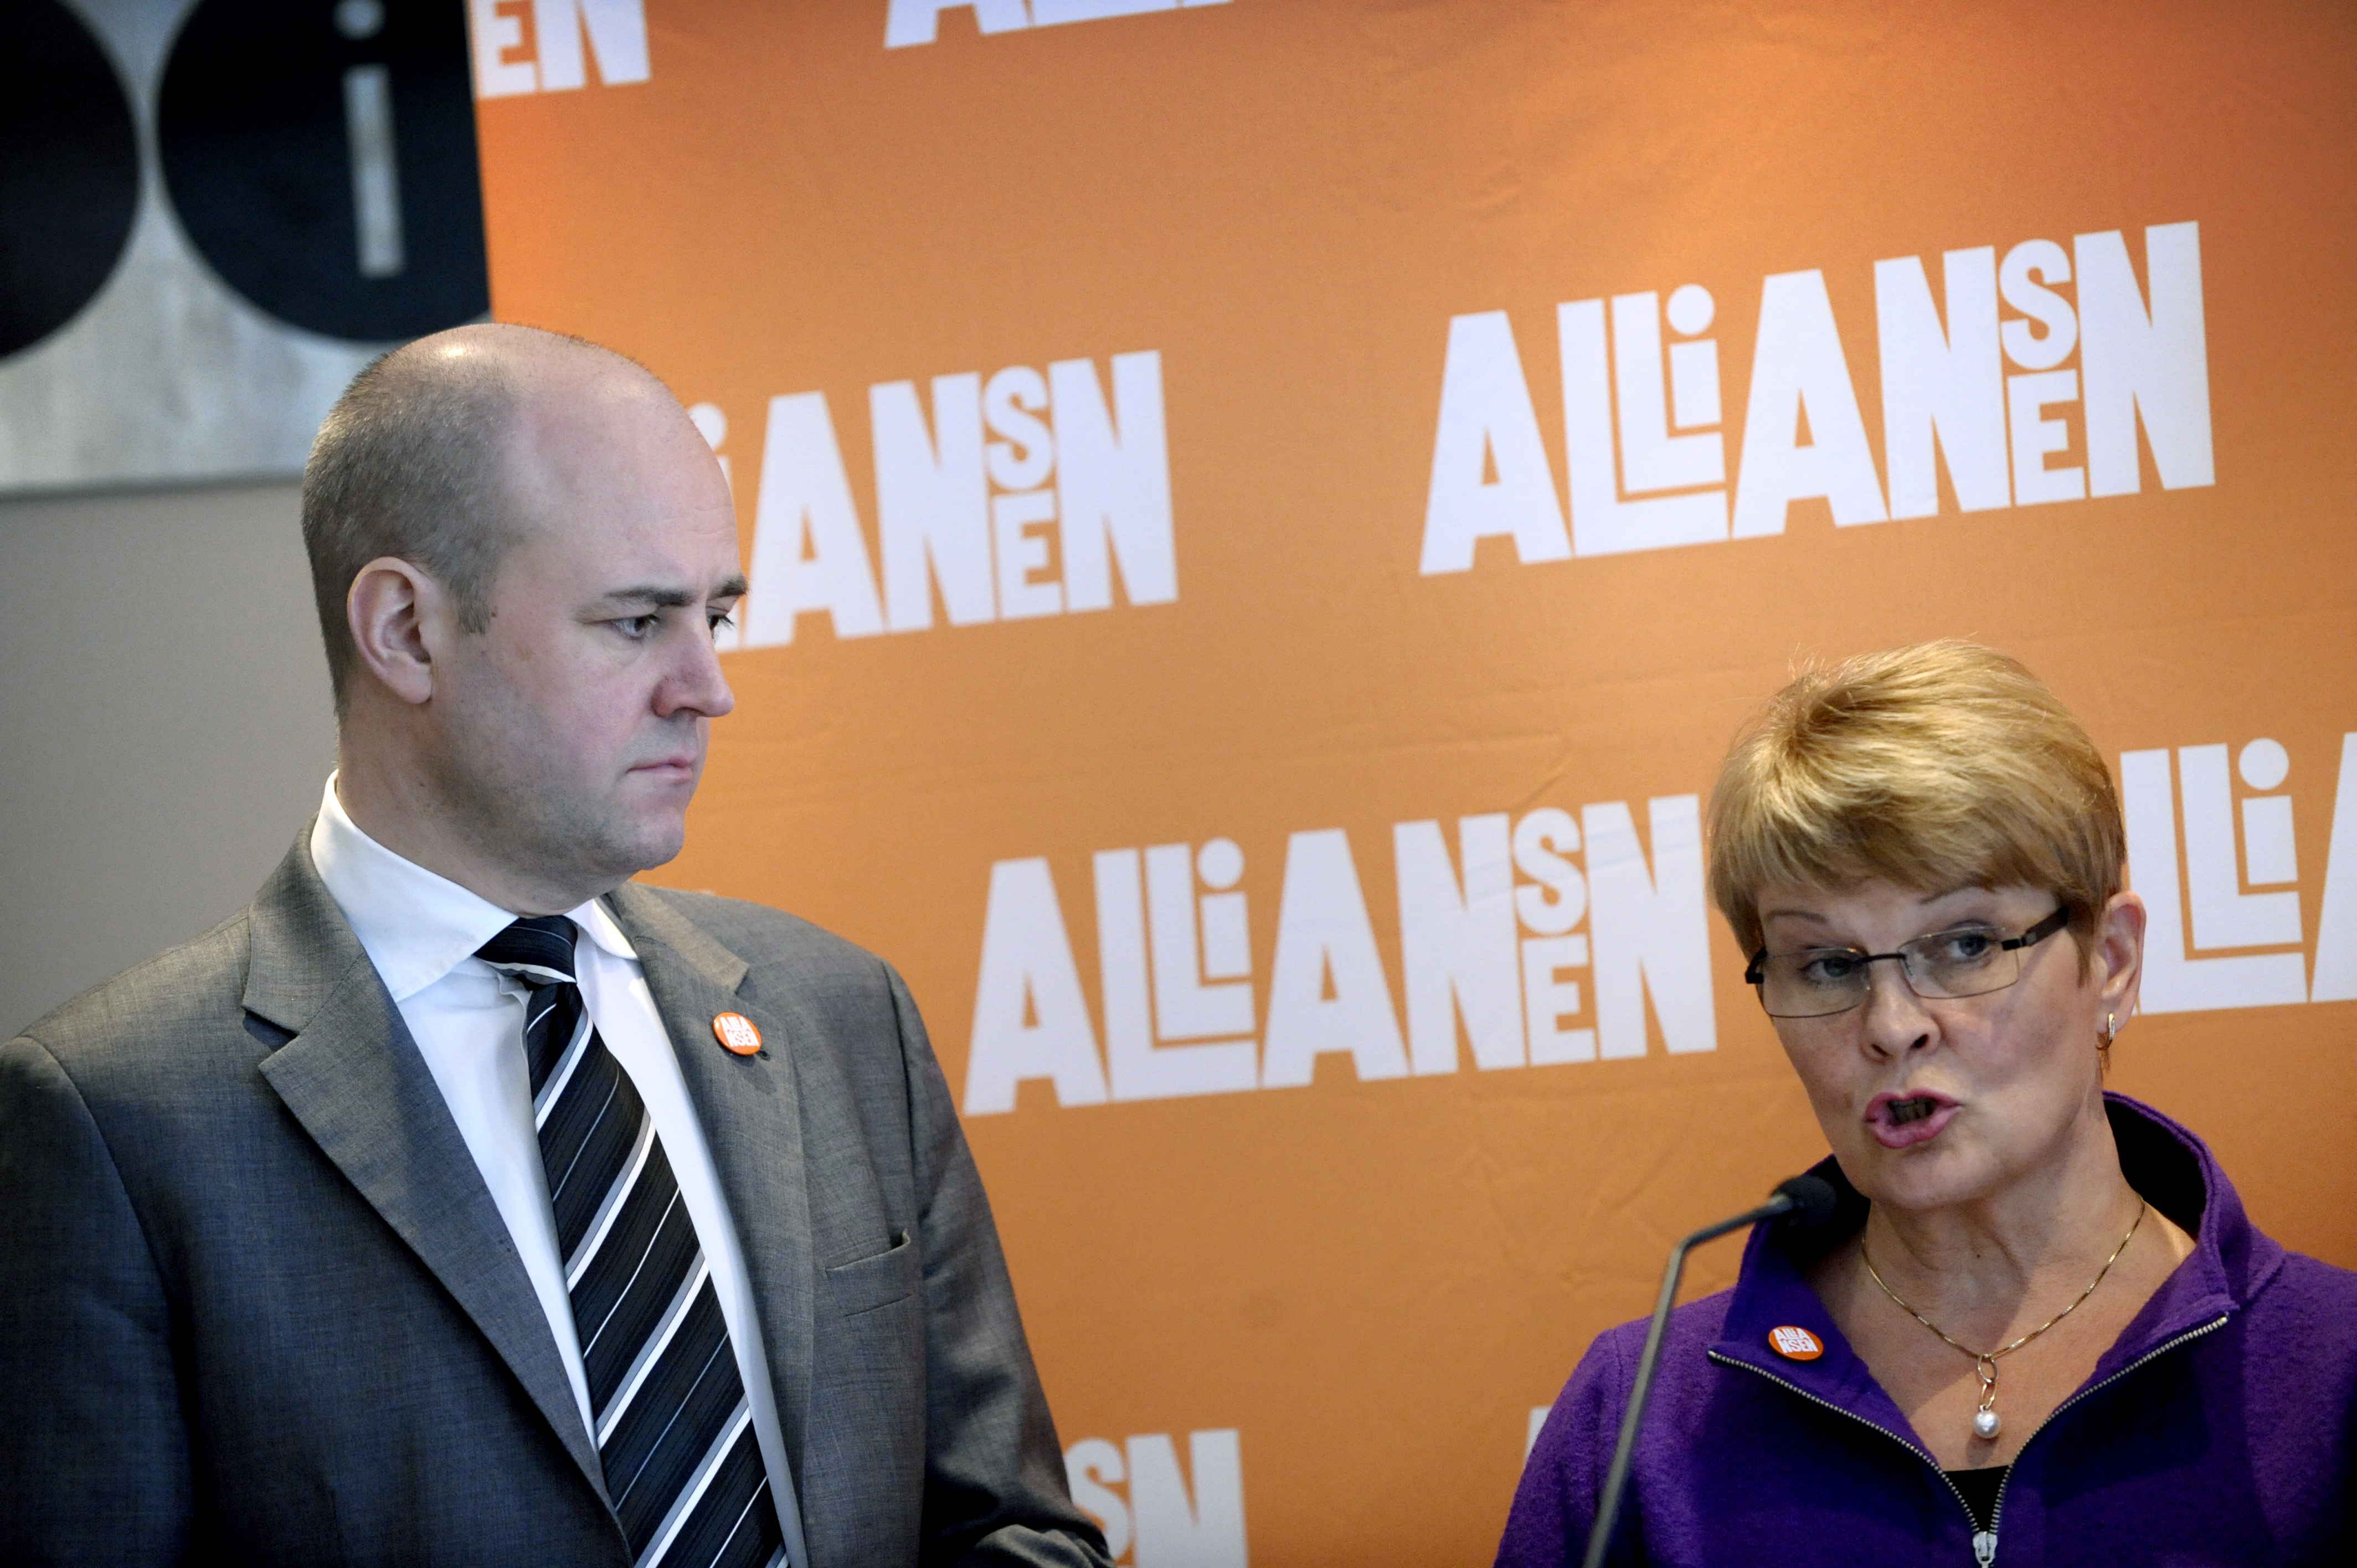 Riksdagsvalet 2010, Centerpartiet, Alliansen, Moderaterna, Maud Olofsson, Regeringen, Fredrik Reinfeldt